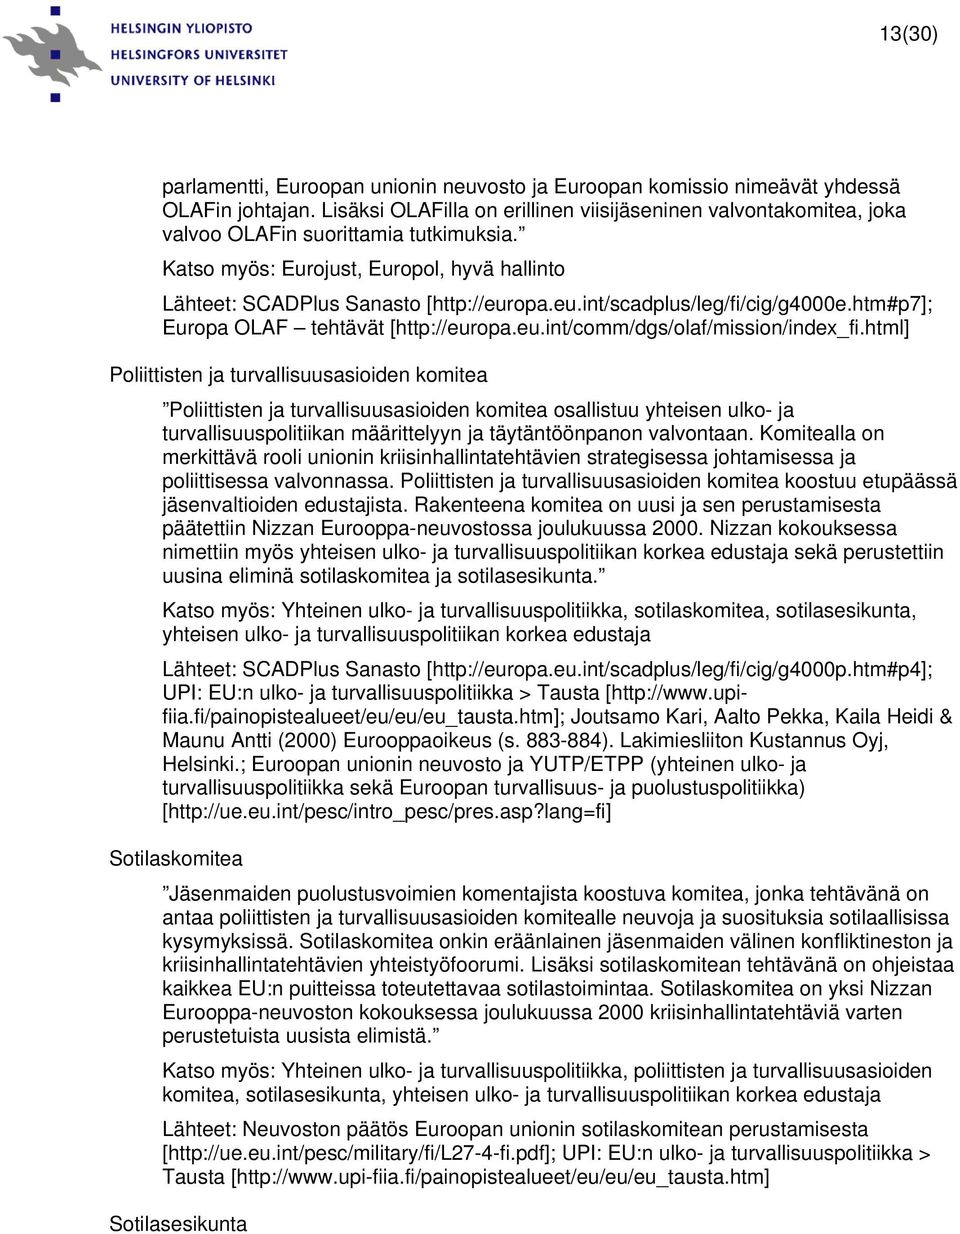 opa.eu.int/scadplus/leg/fi/cig/g4000e.htm#p7]; Europa OLAF tehtävät [http://europa.eu.int/comm/dgs/olaf/mission/index_fi.